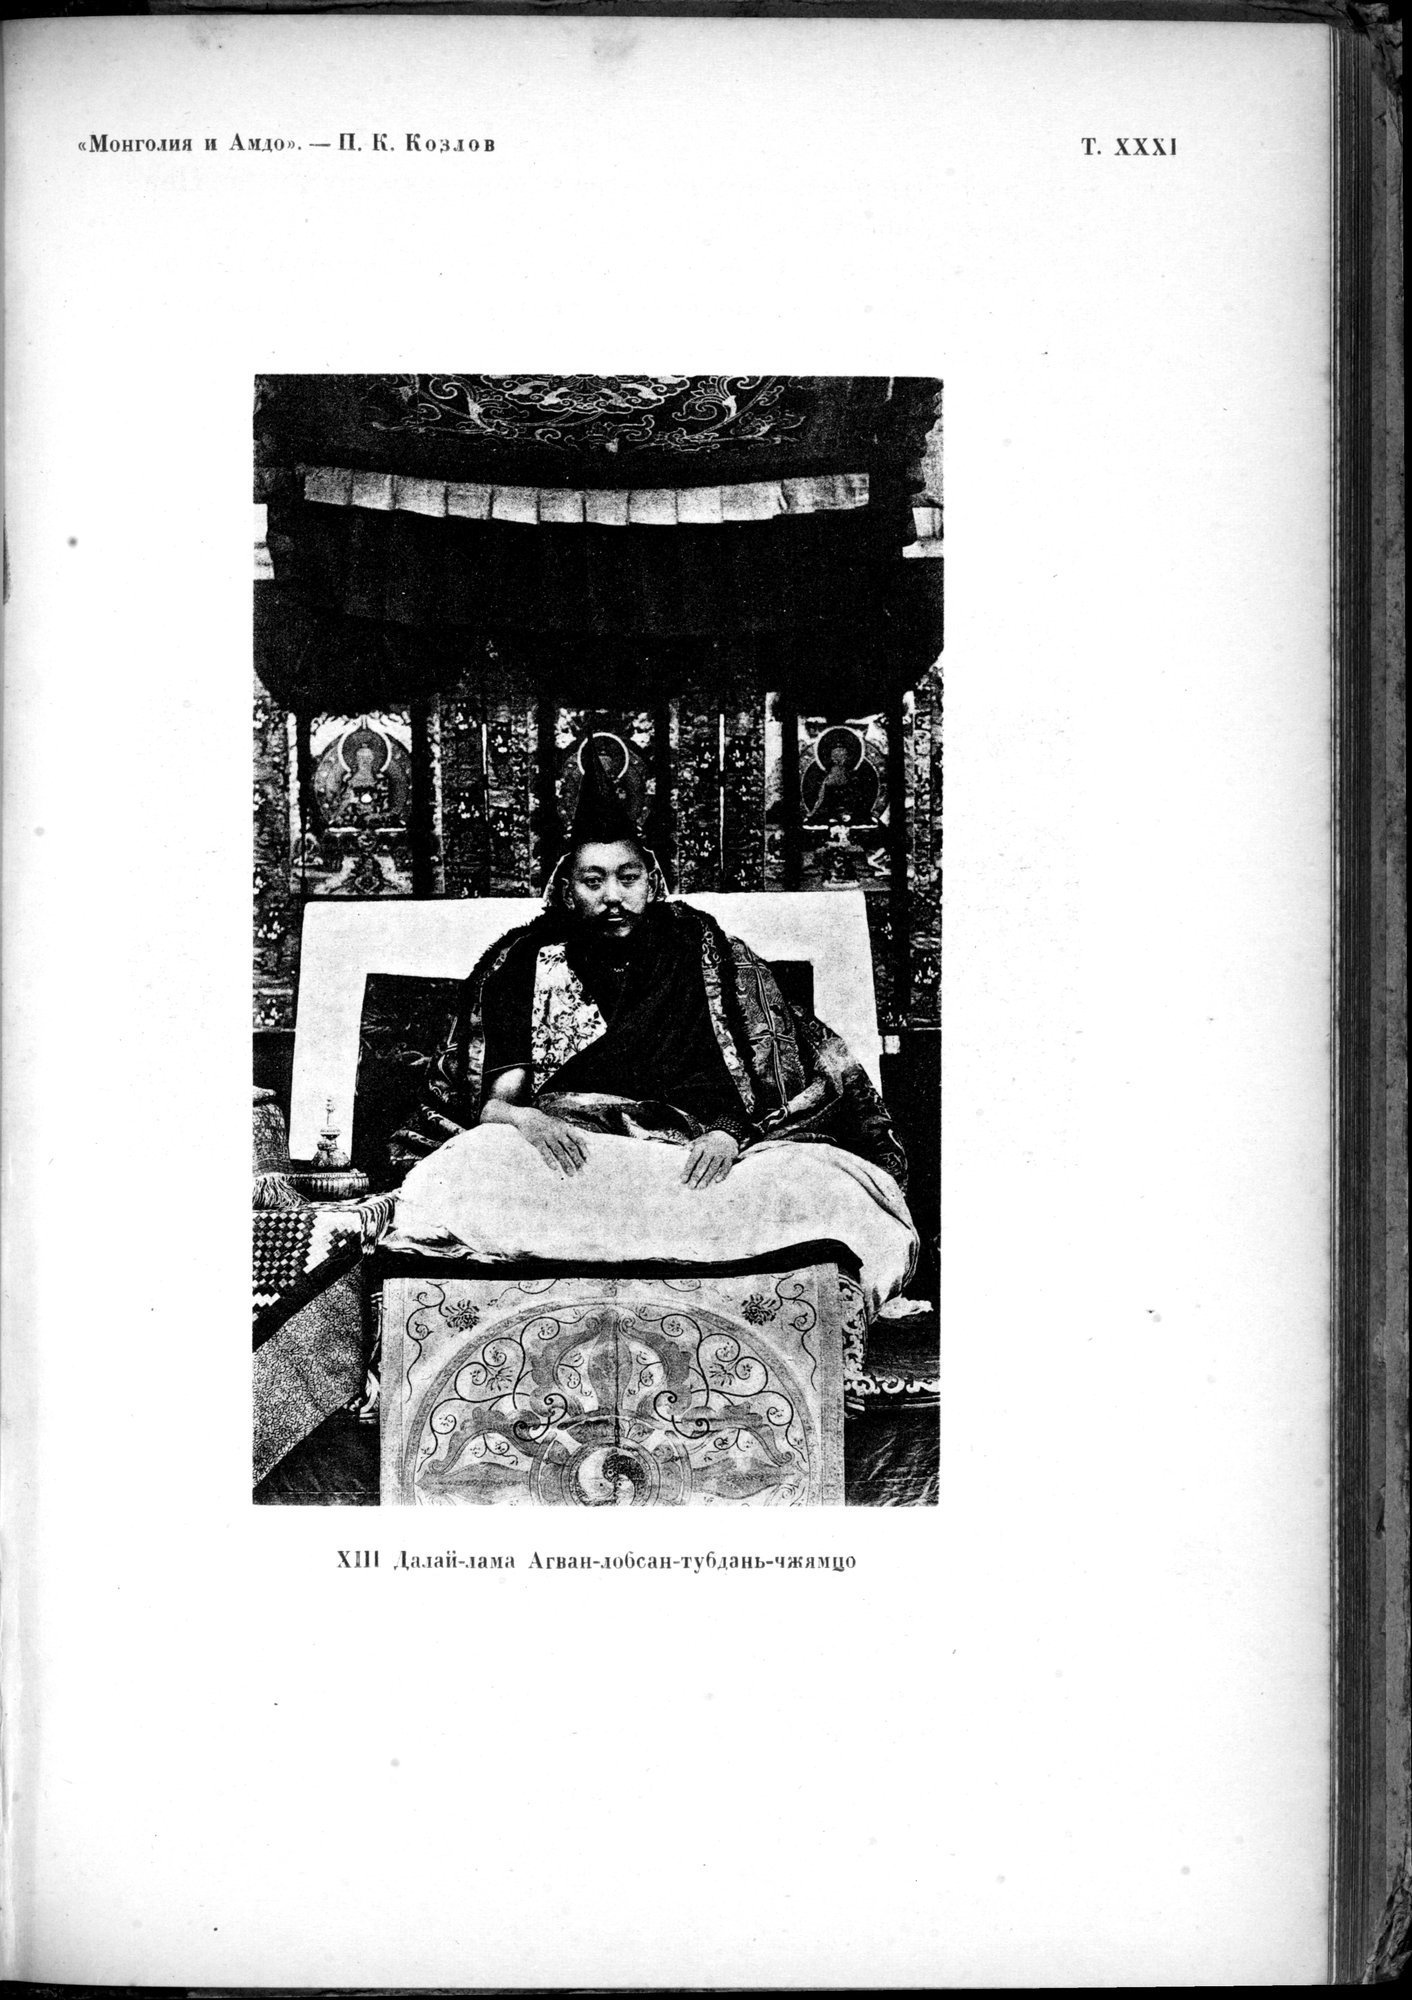 Mongoliya i Amdo i mertby gorod Khara-Khoto : vol.1 / Page 573 (Grayscale High Resolution Image)